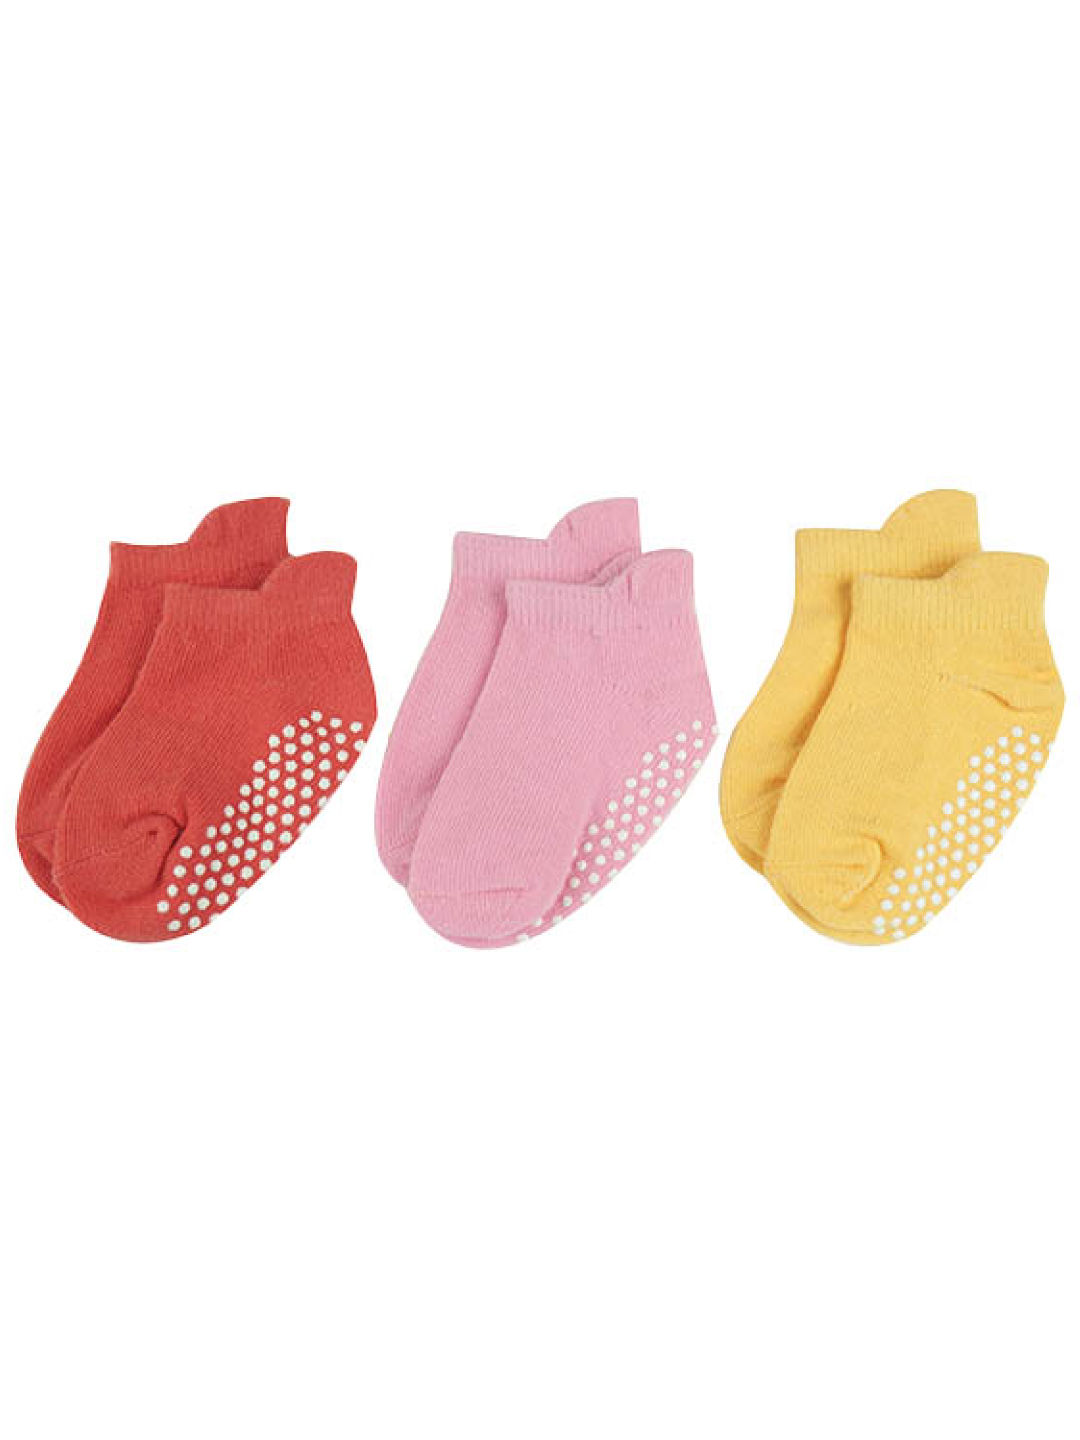 Enfant Anti-Skid Baby Socks (3 Pairs)